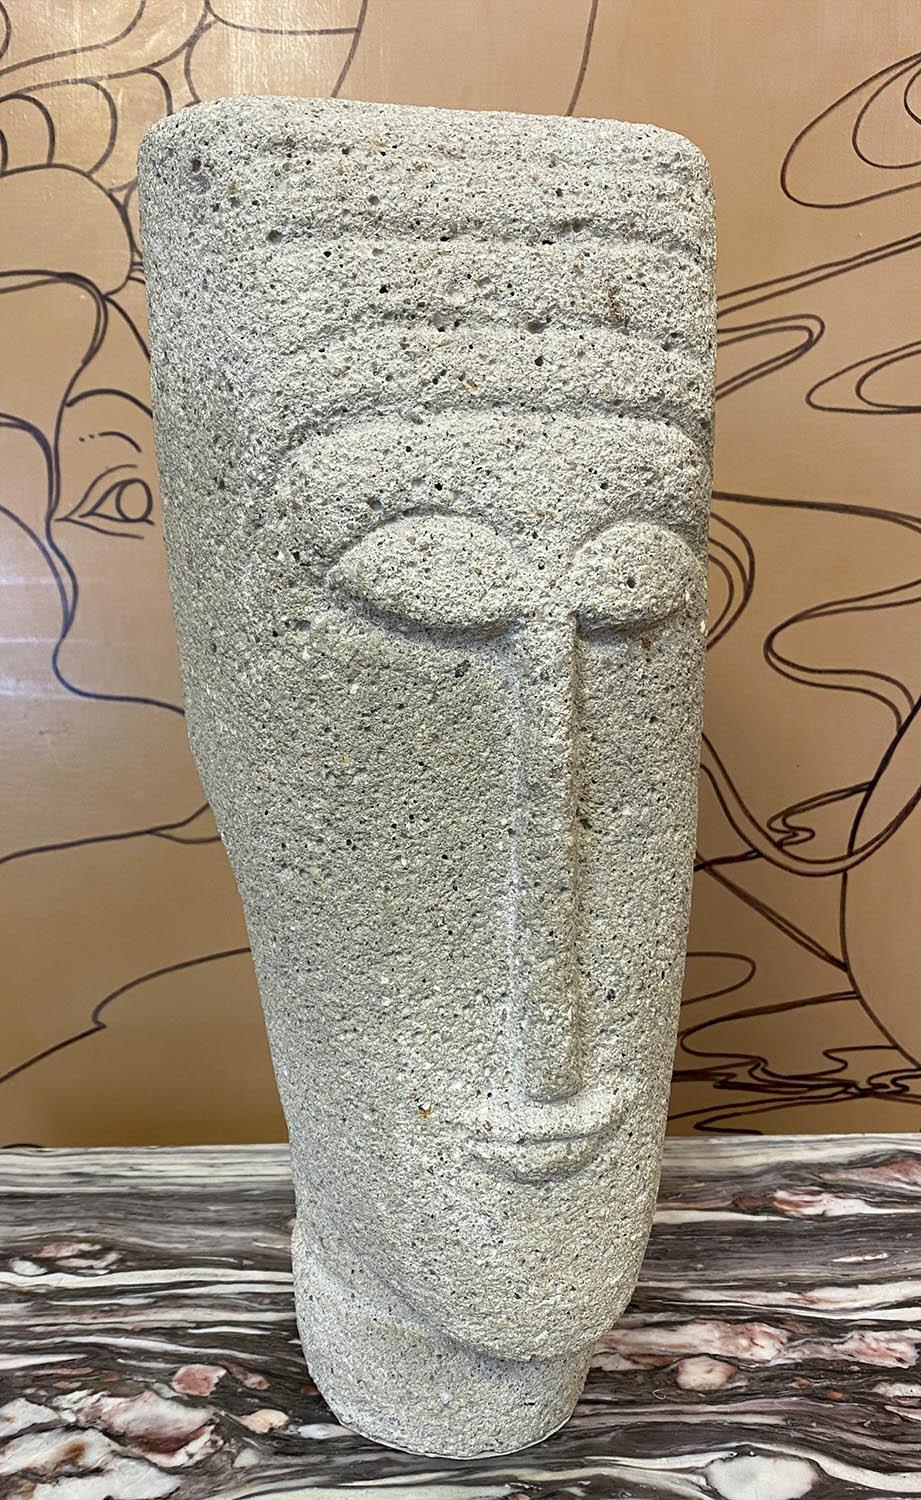 GILLIAN MEIJER 'Monolithic Head', composite stone, 40cm x 20cm x 16cm.